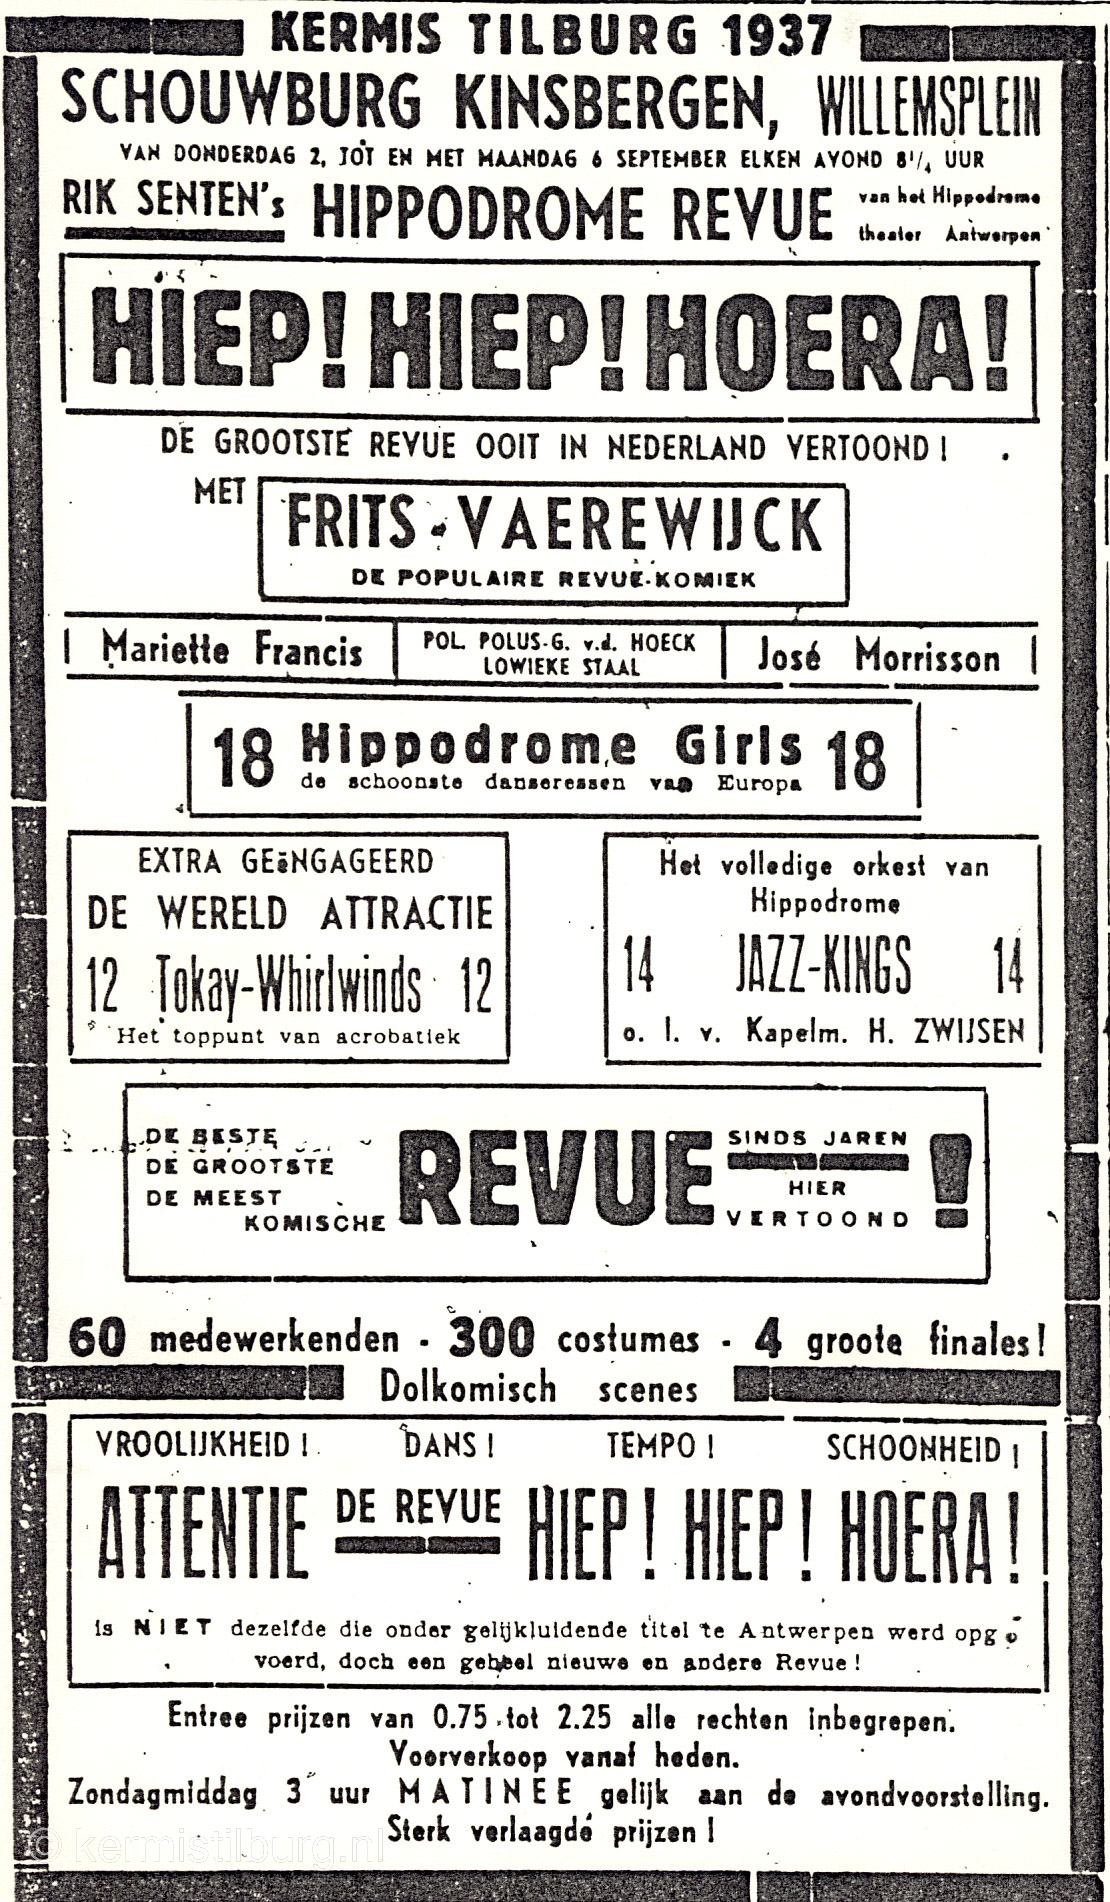 1937, Kermis, Tilburg, Tilburgse kermis